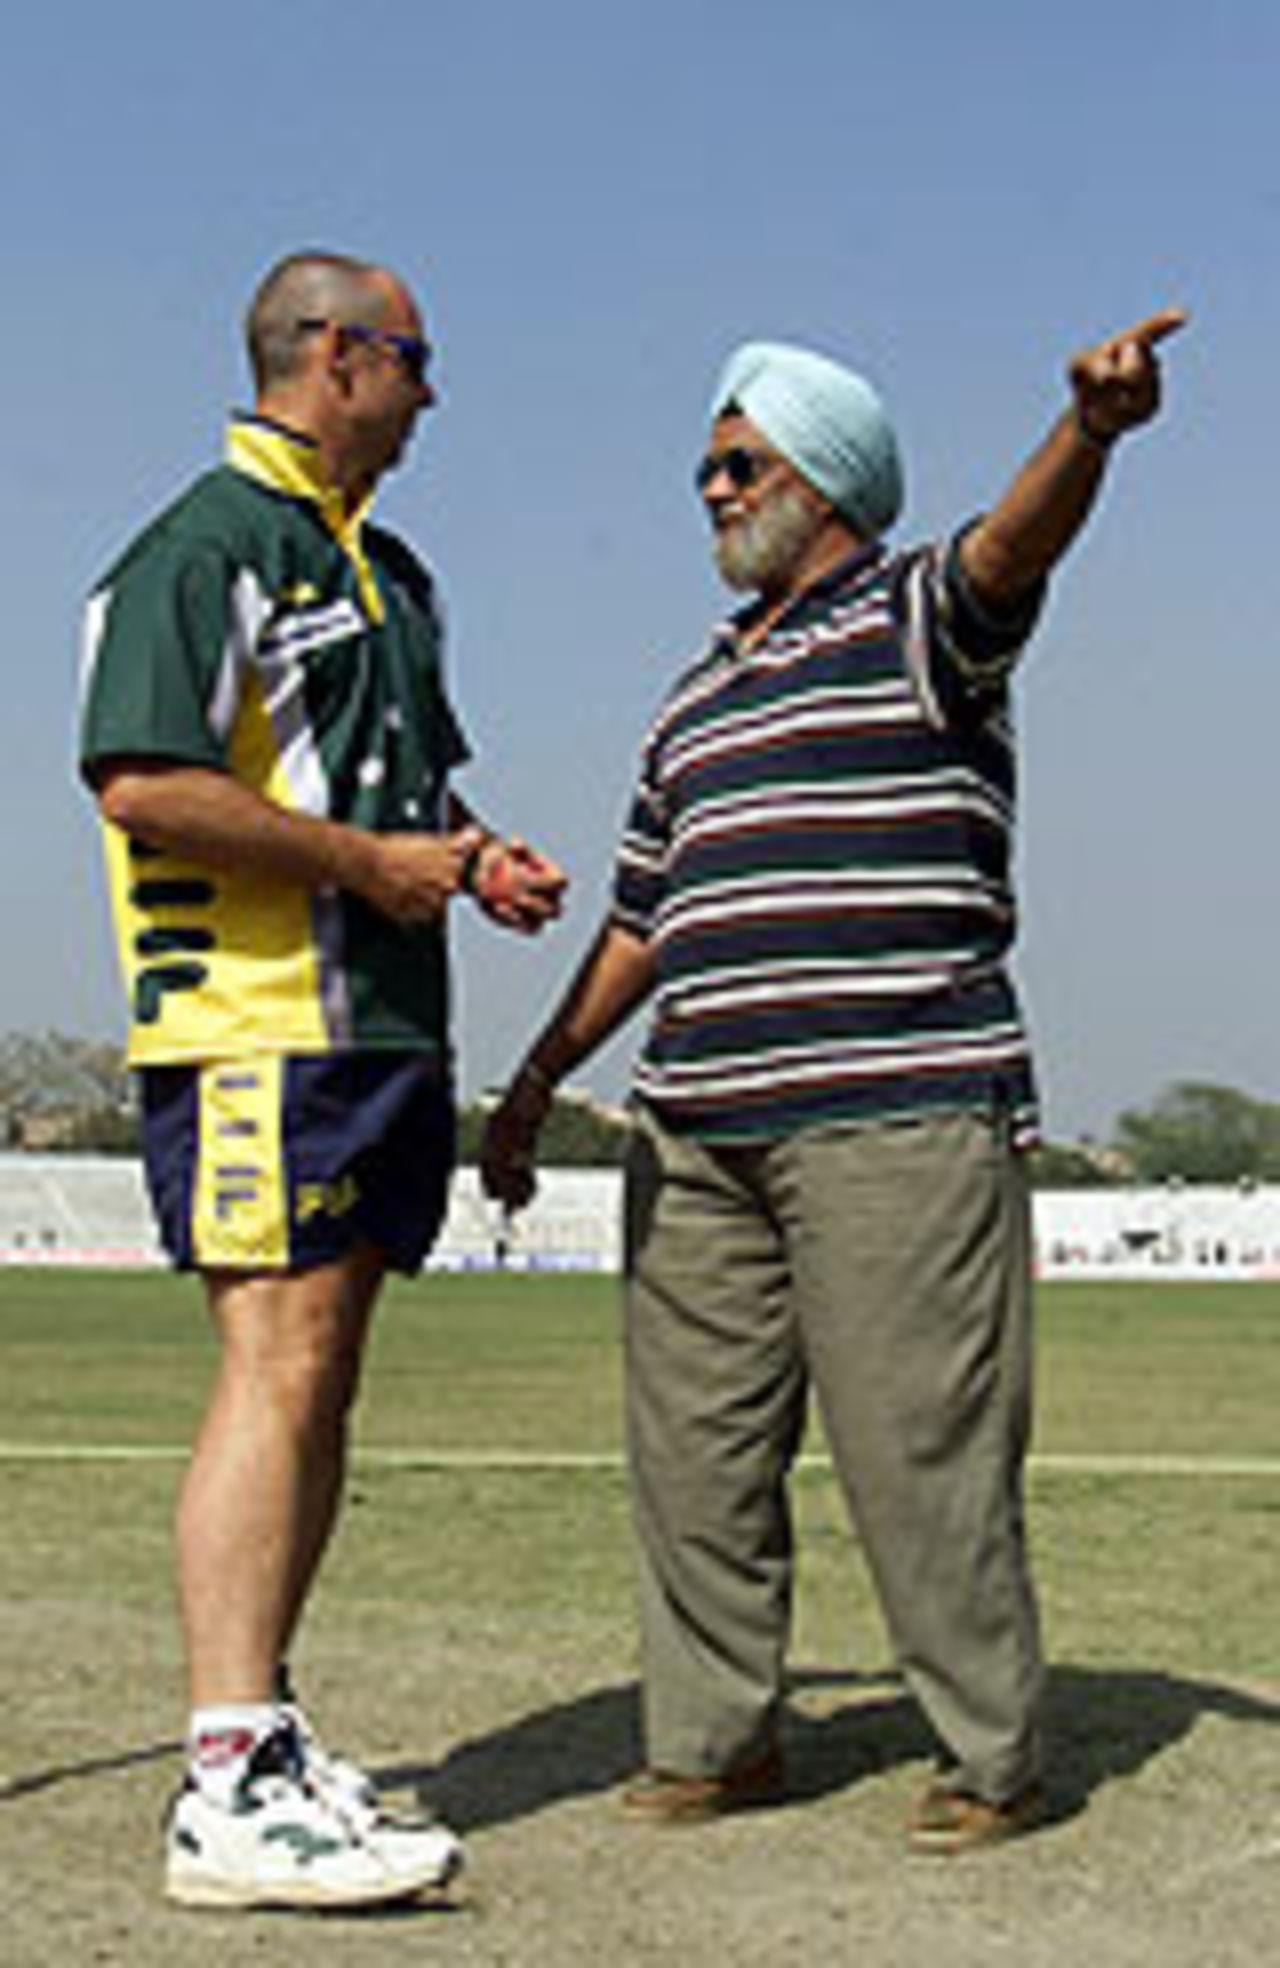 Bishan Singh Bedi dispenses advice during Australia's tour of India, March 2001